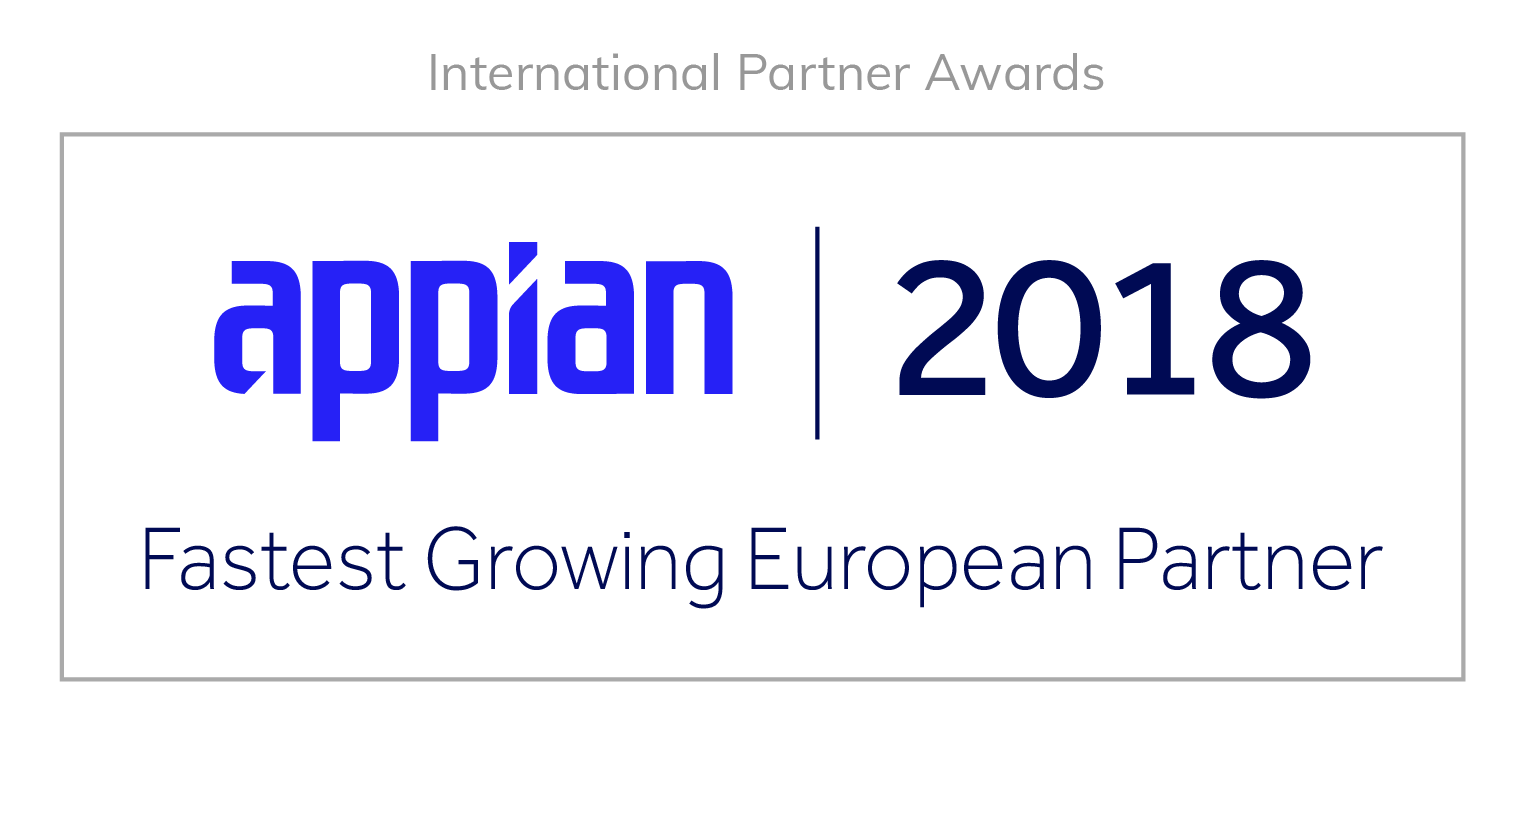 European Partner 2018